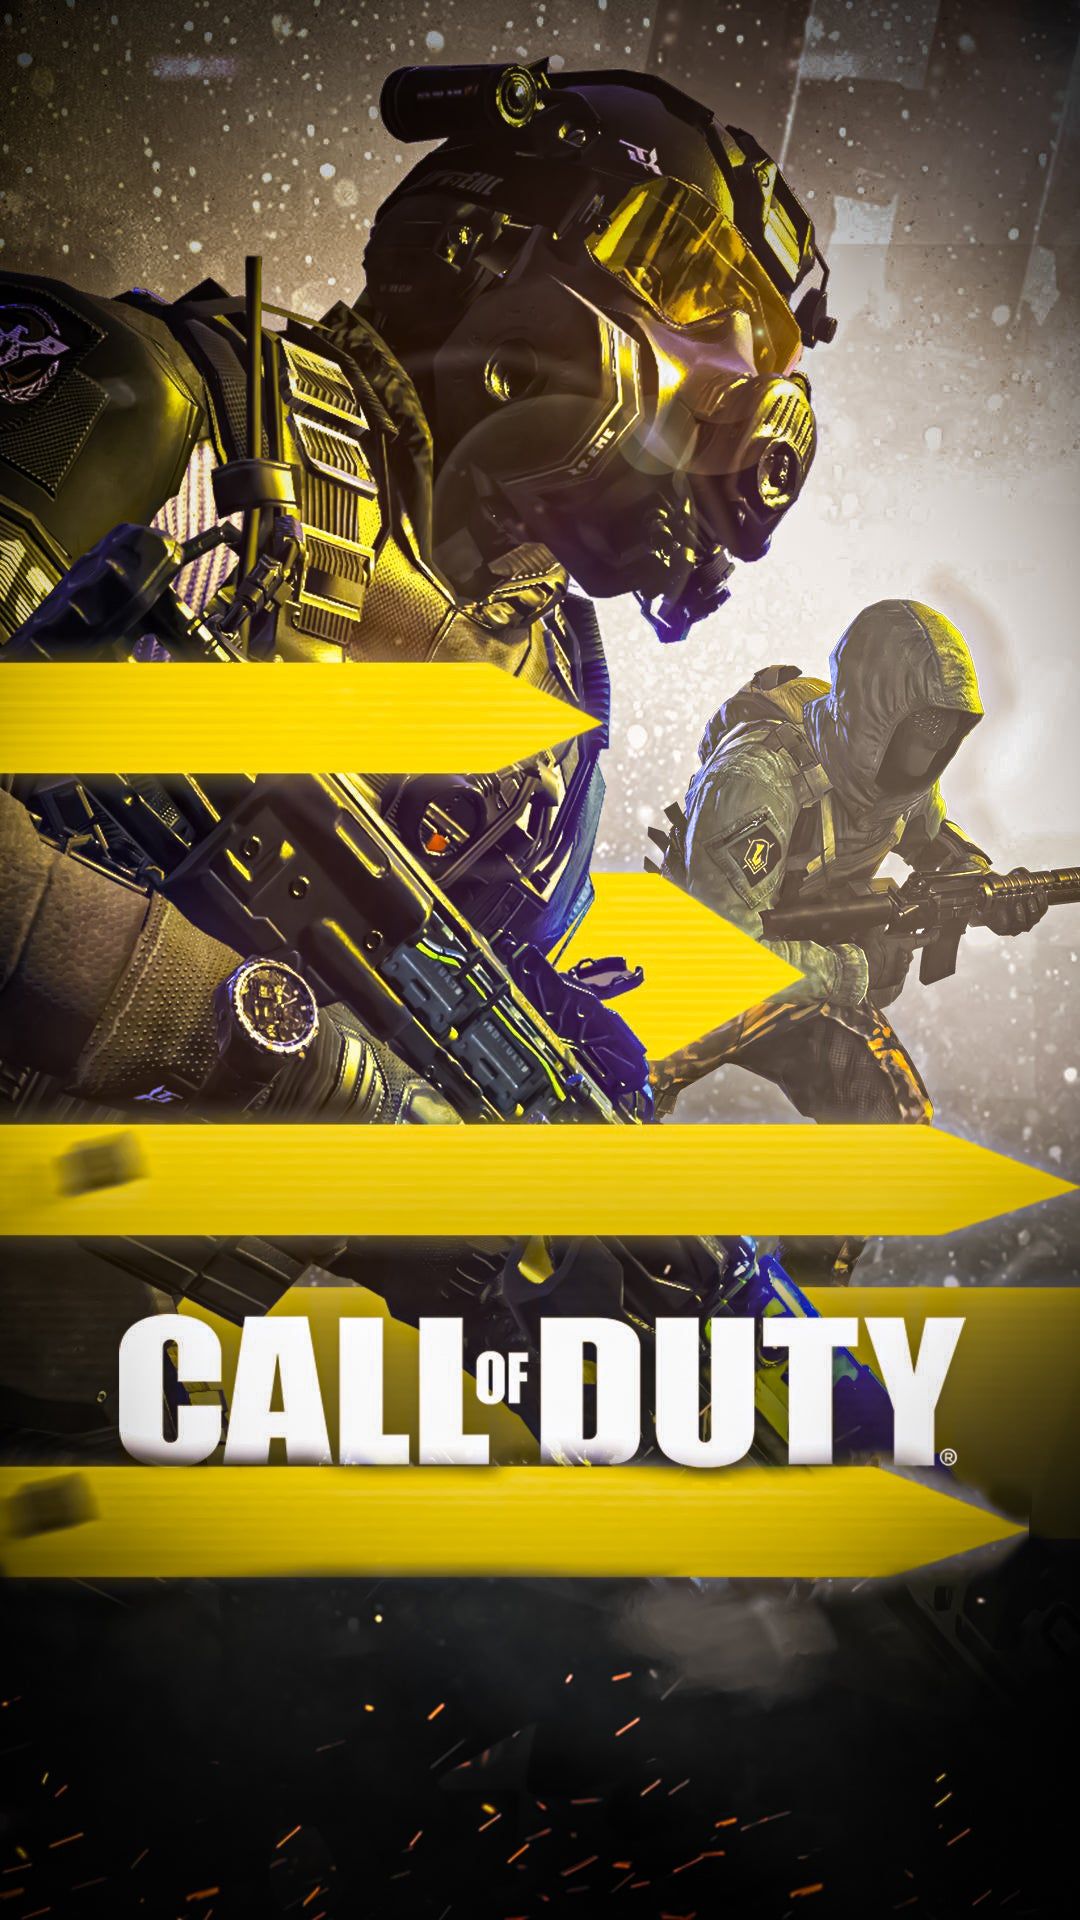 Call of Duty: Mobile - July 5th Community Update : r/CallOfDutyMobile